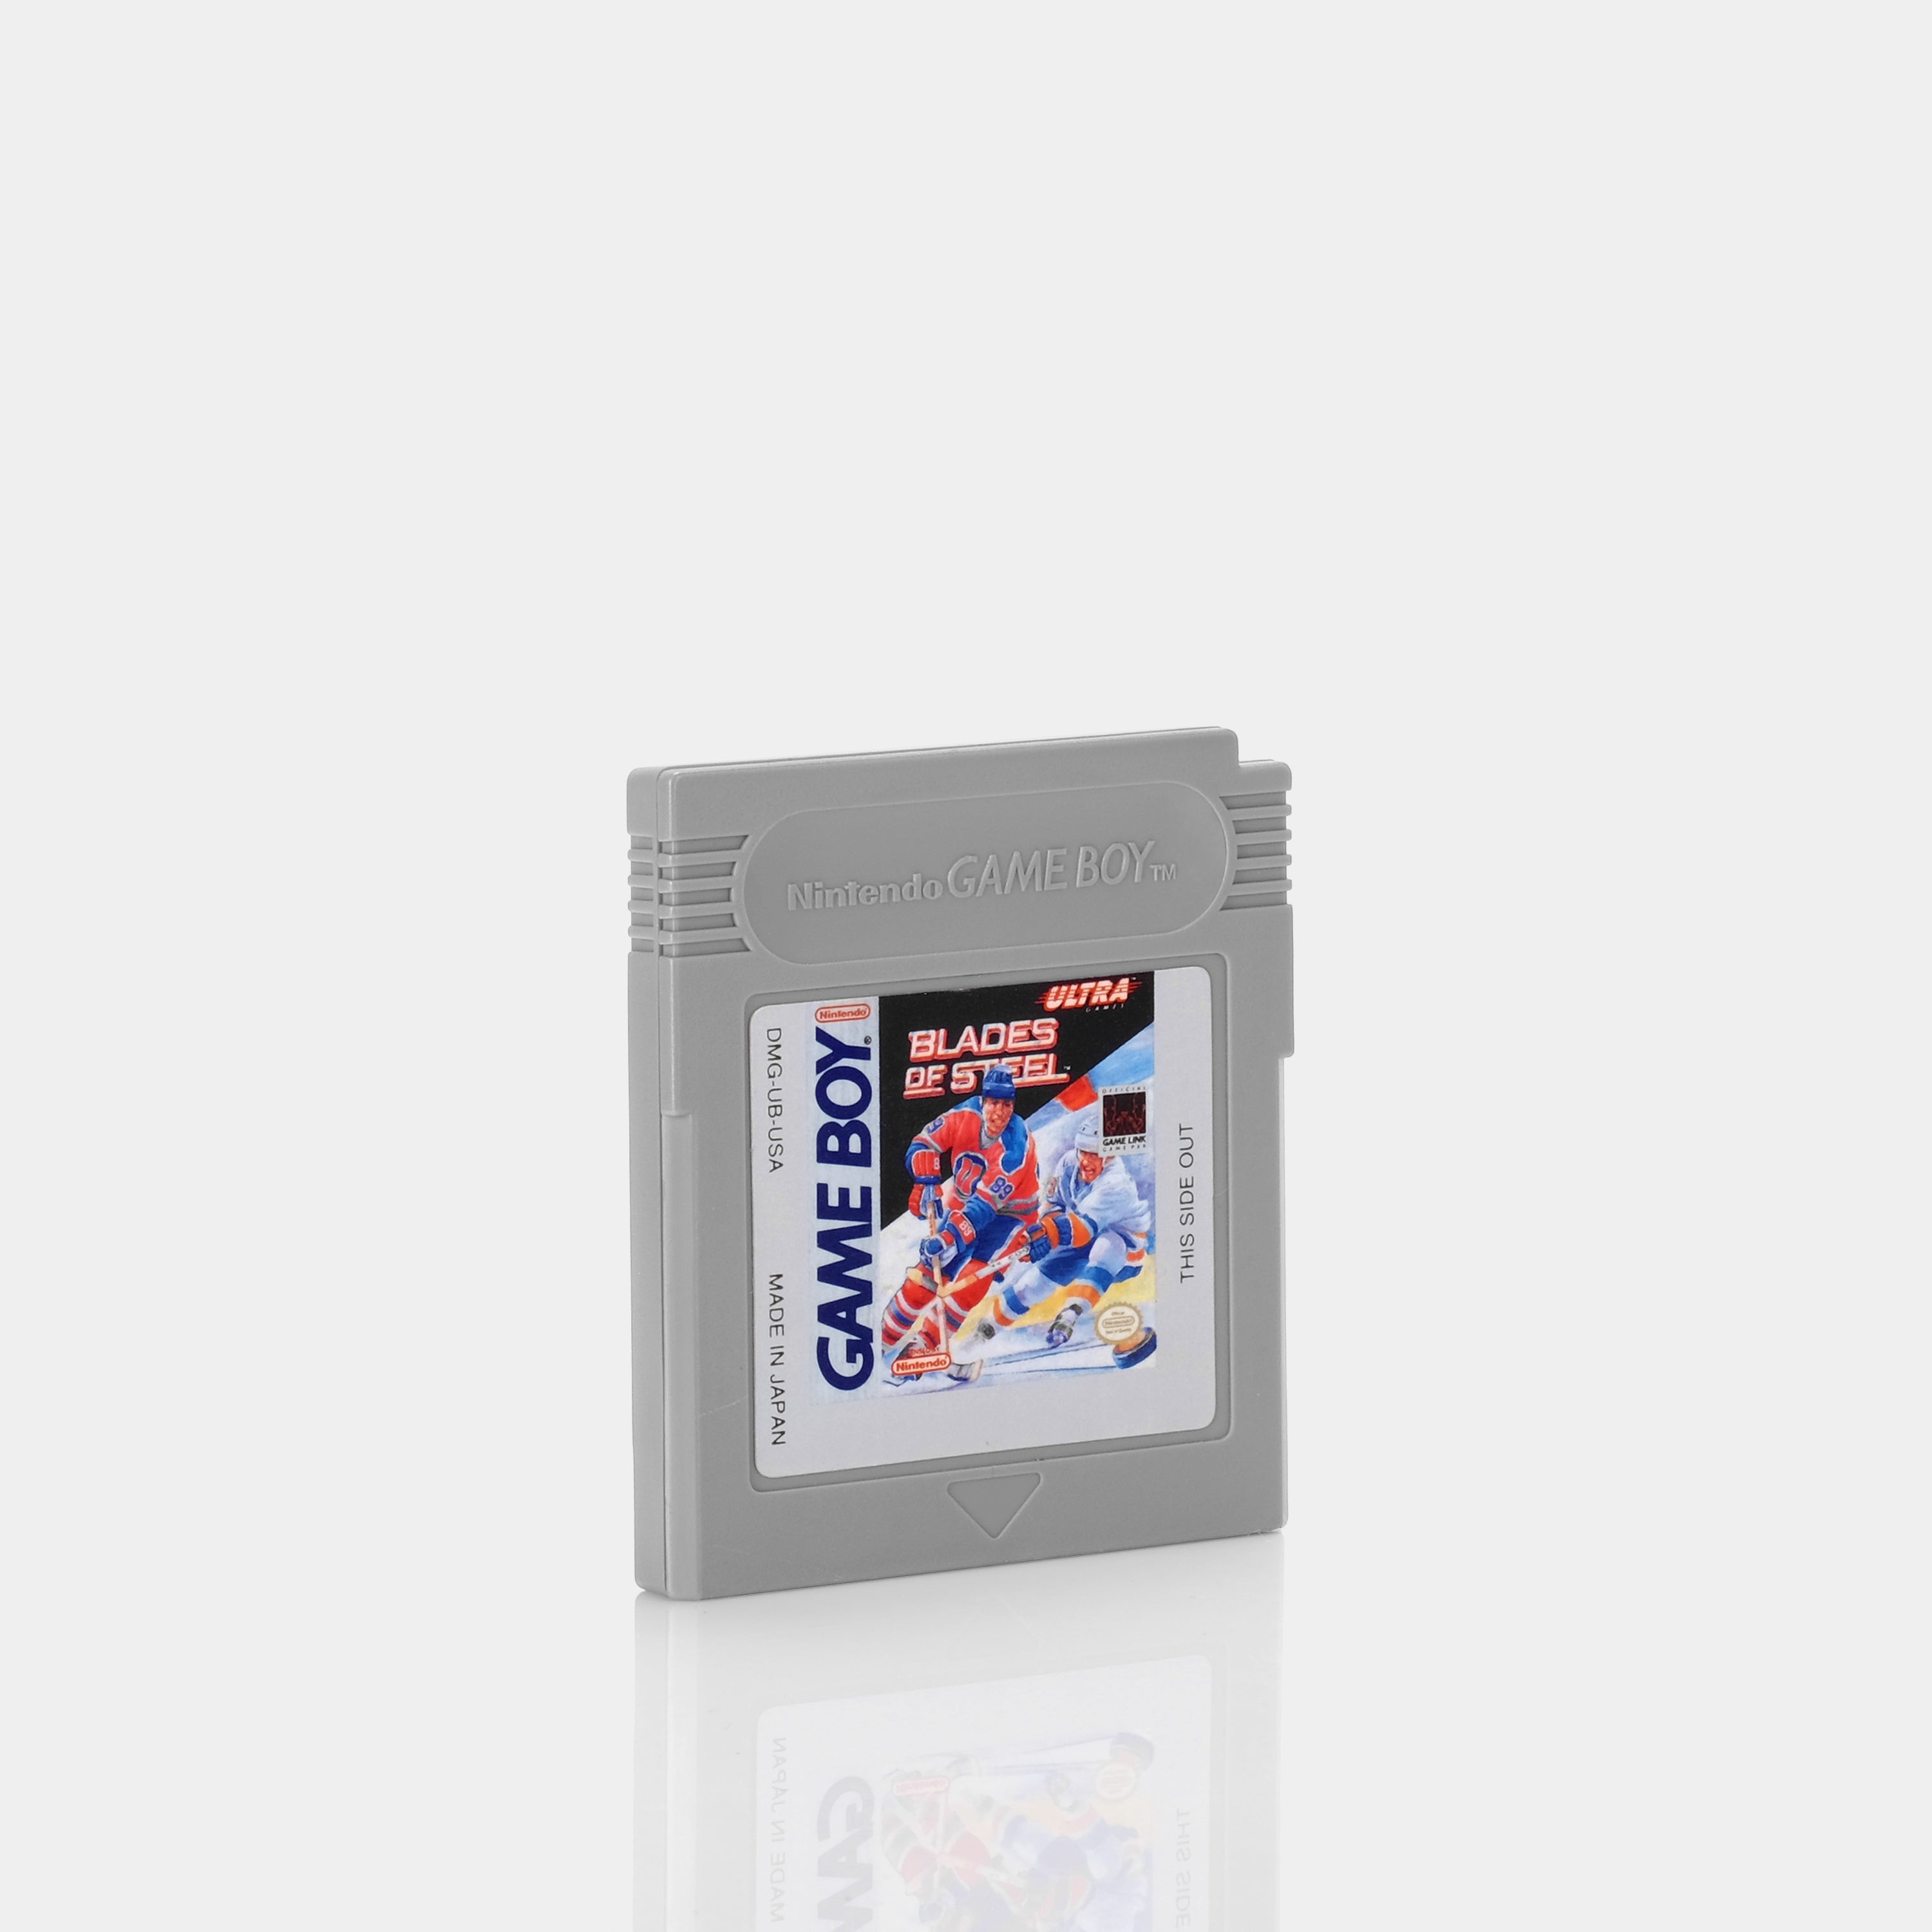 Blades of Steel Game Boy Game